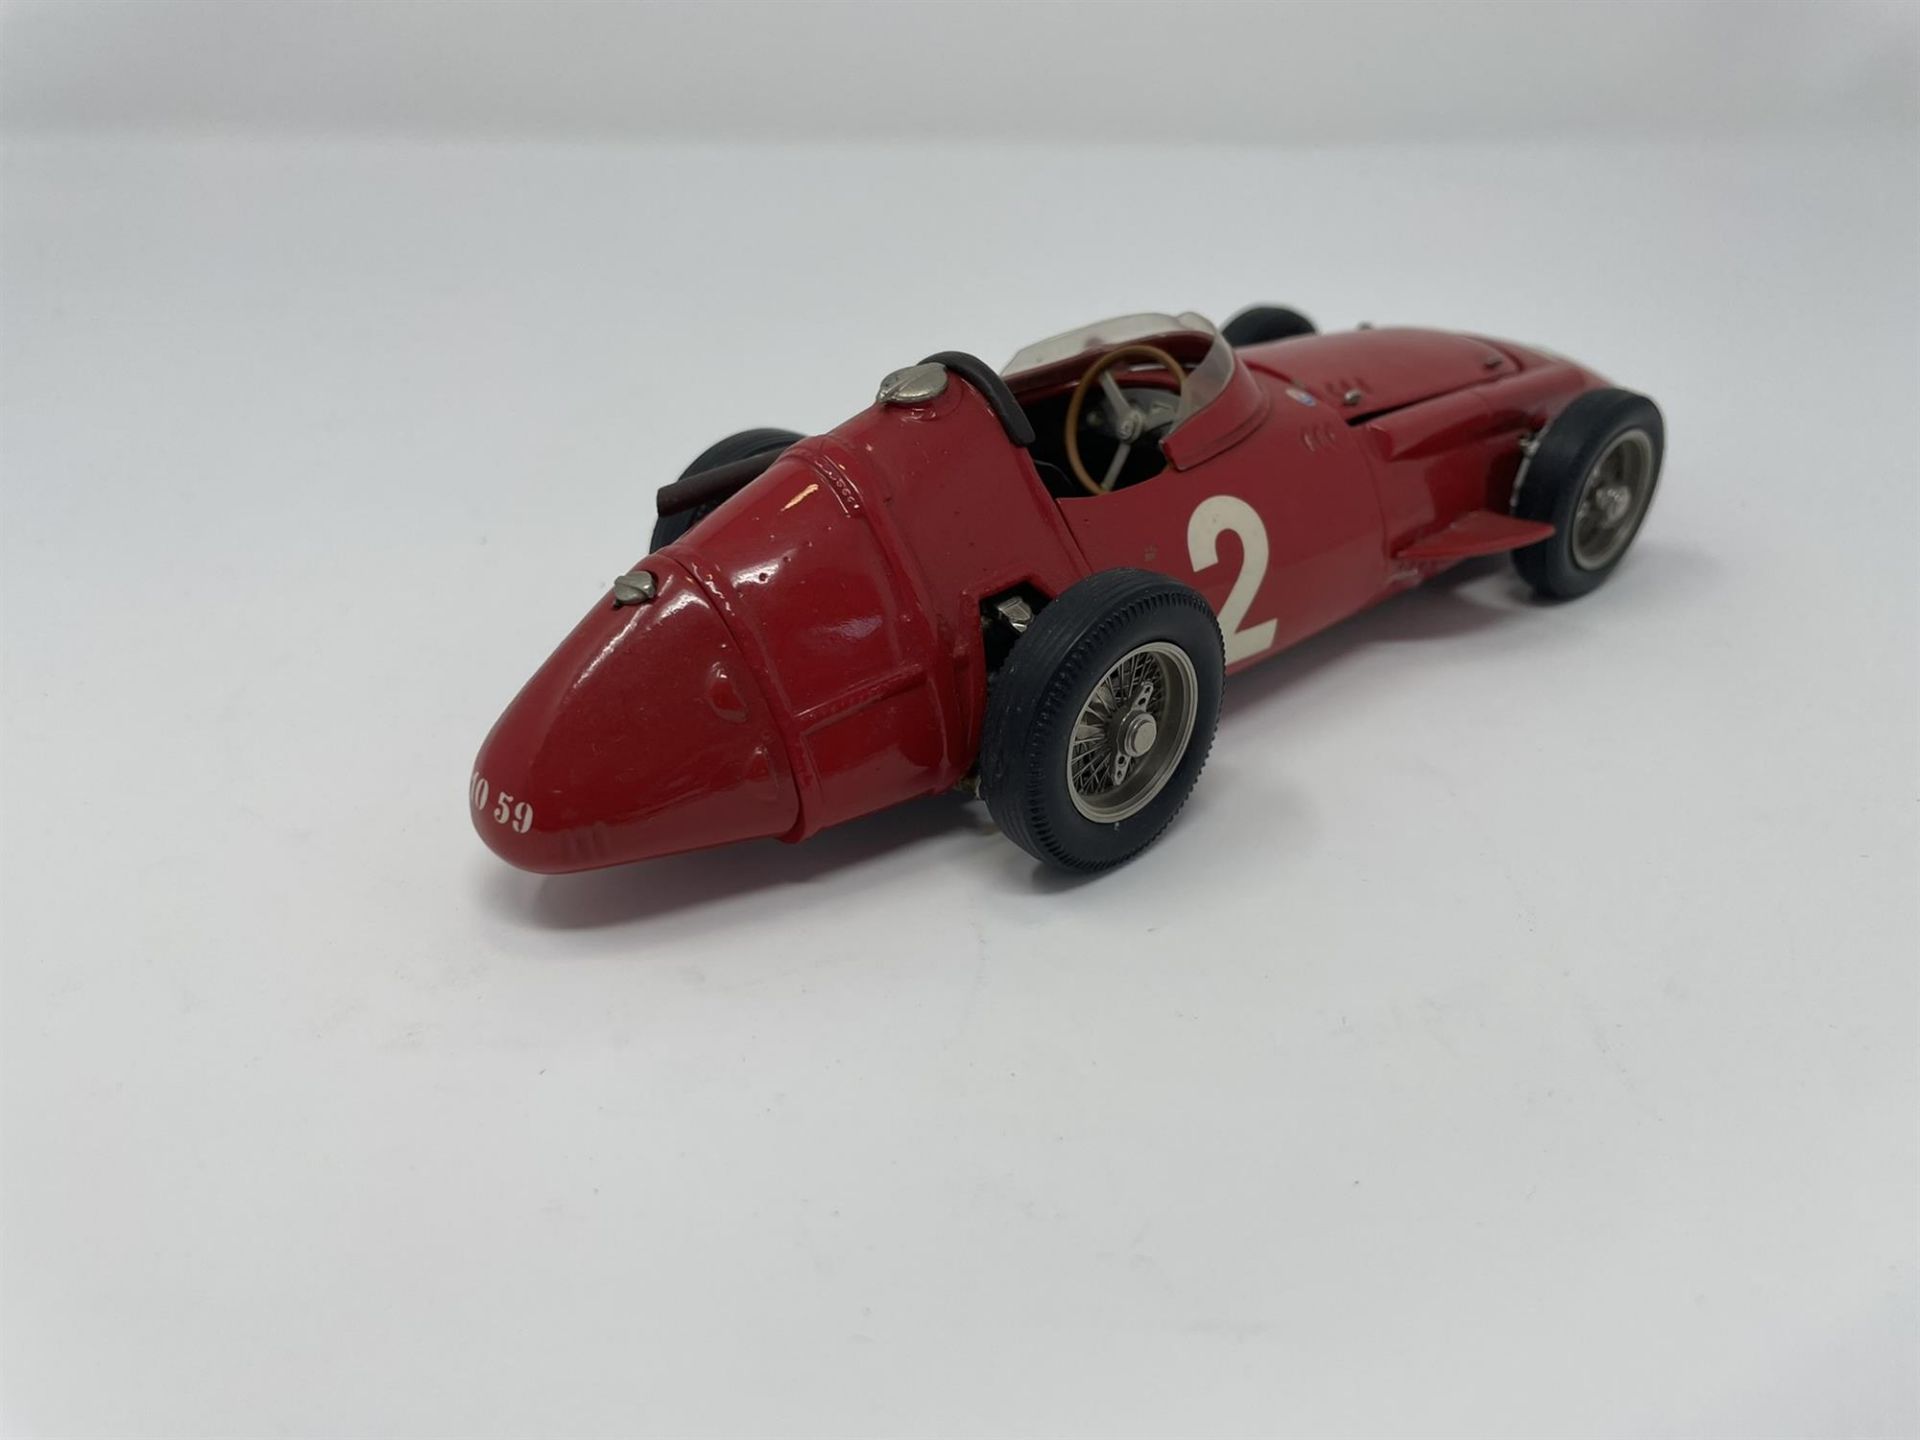 A Period 1/24th Scale Model of the Maserati 250F - Image 4 of 10